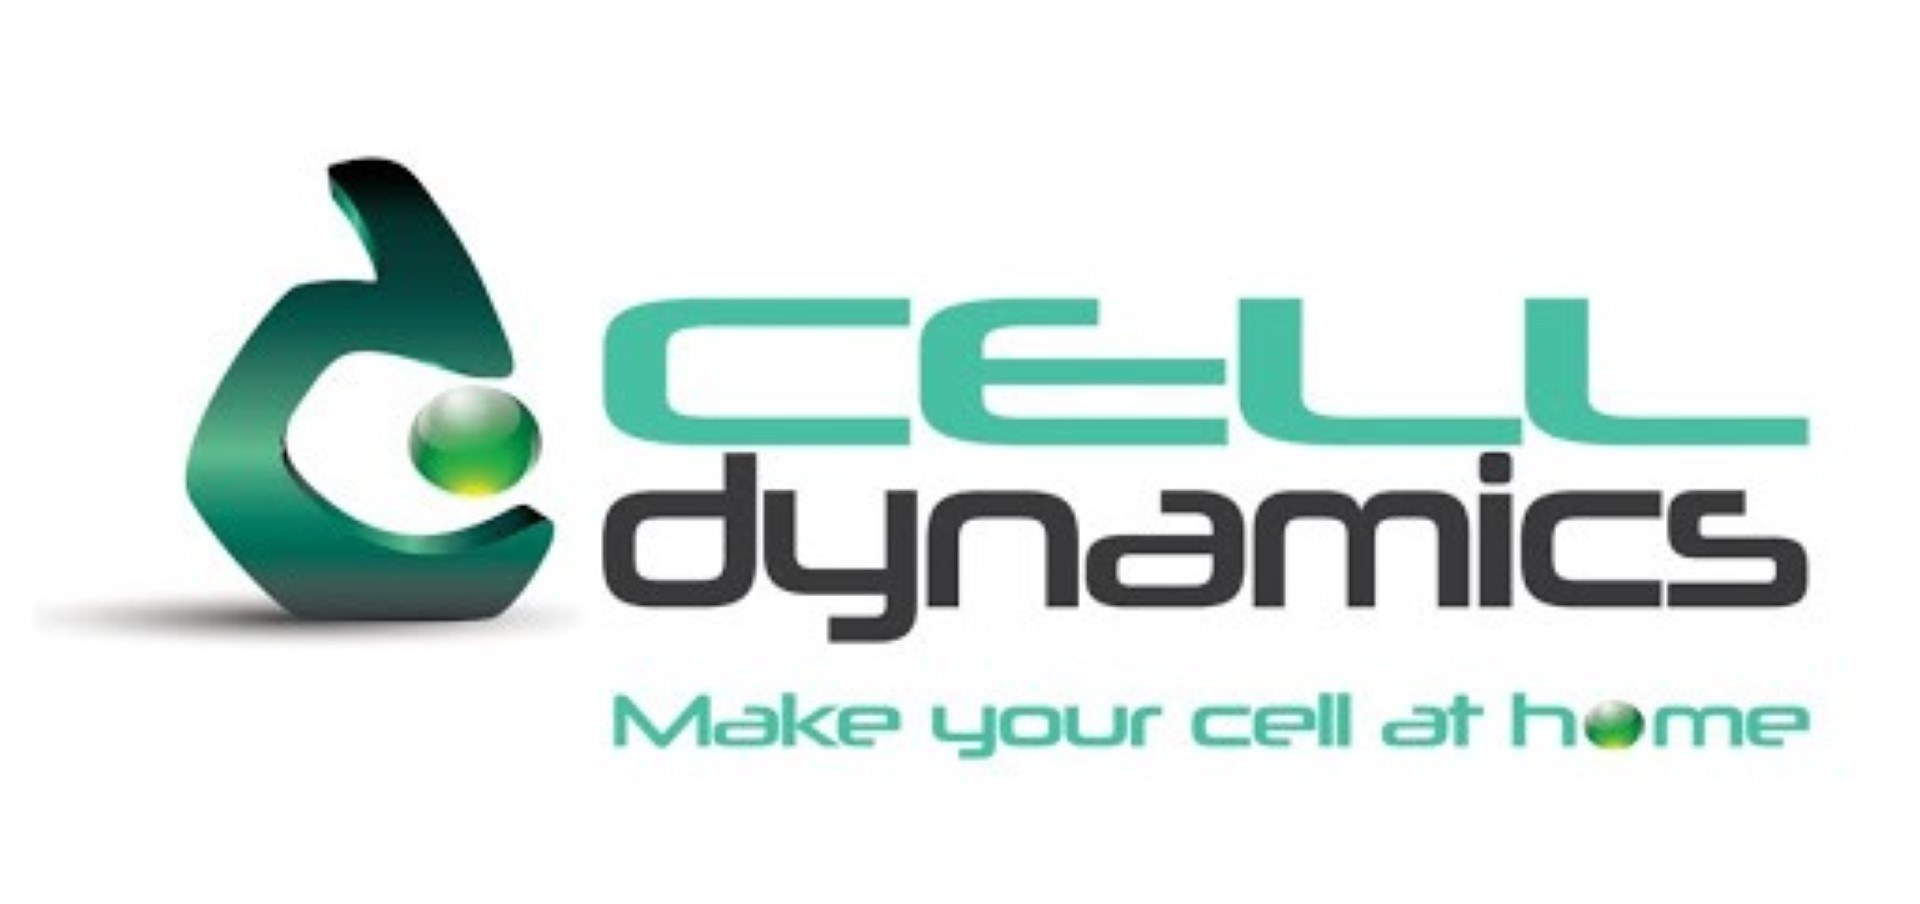 Cell Dynamics